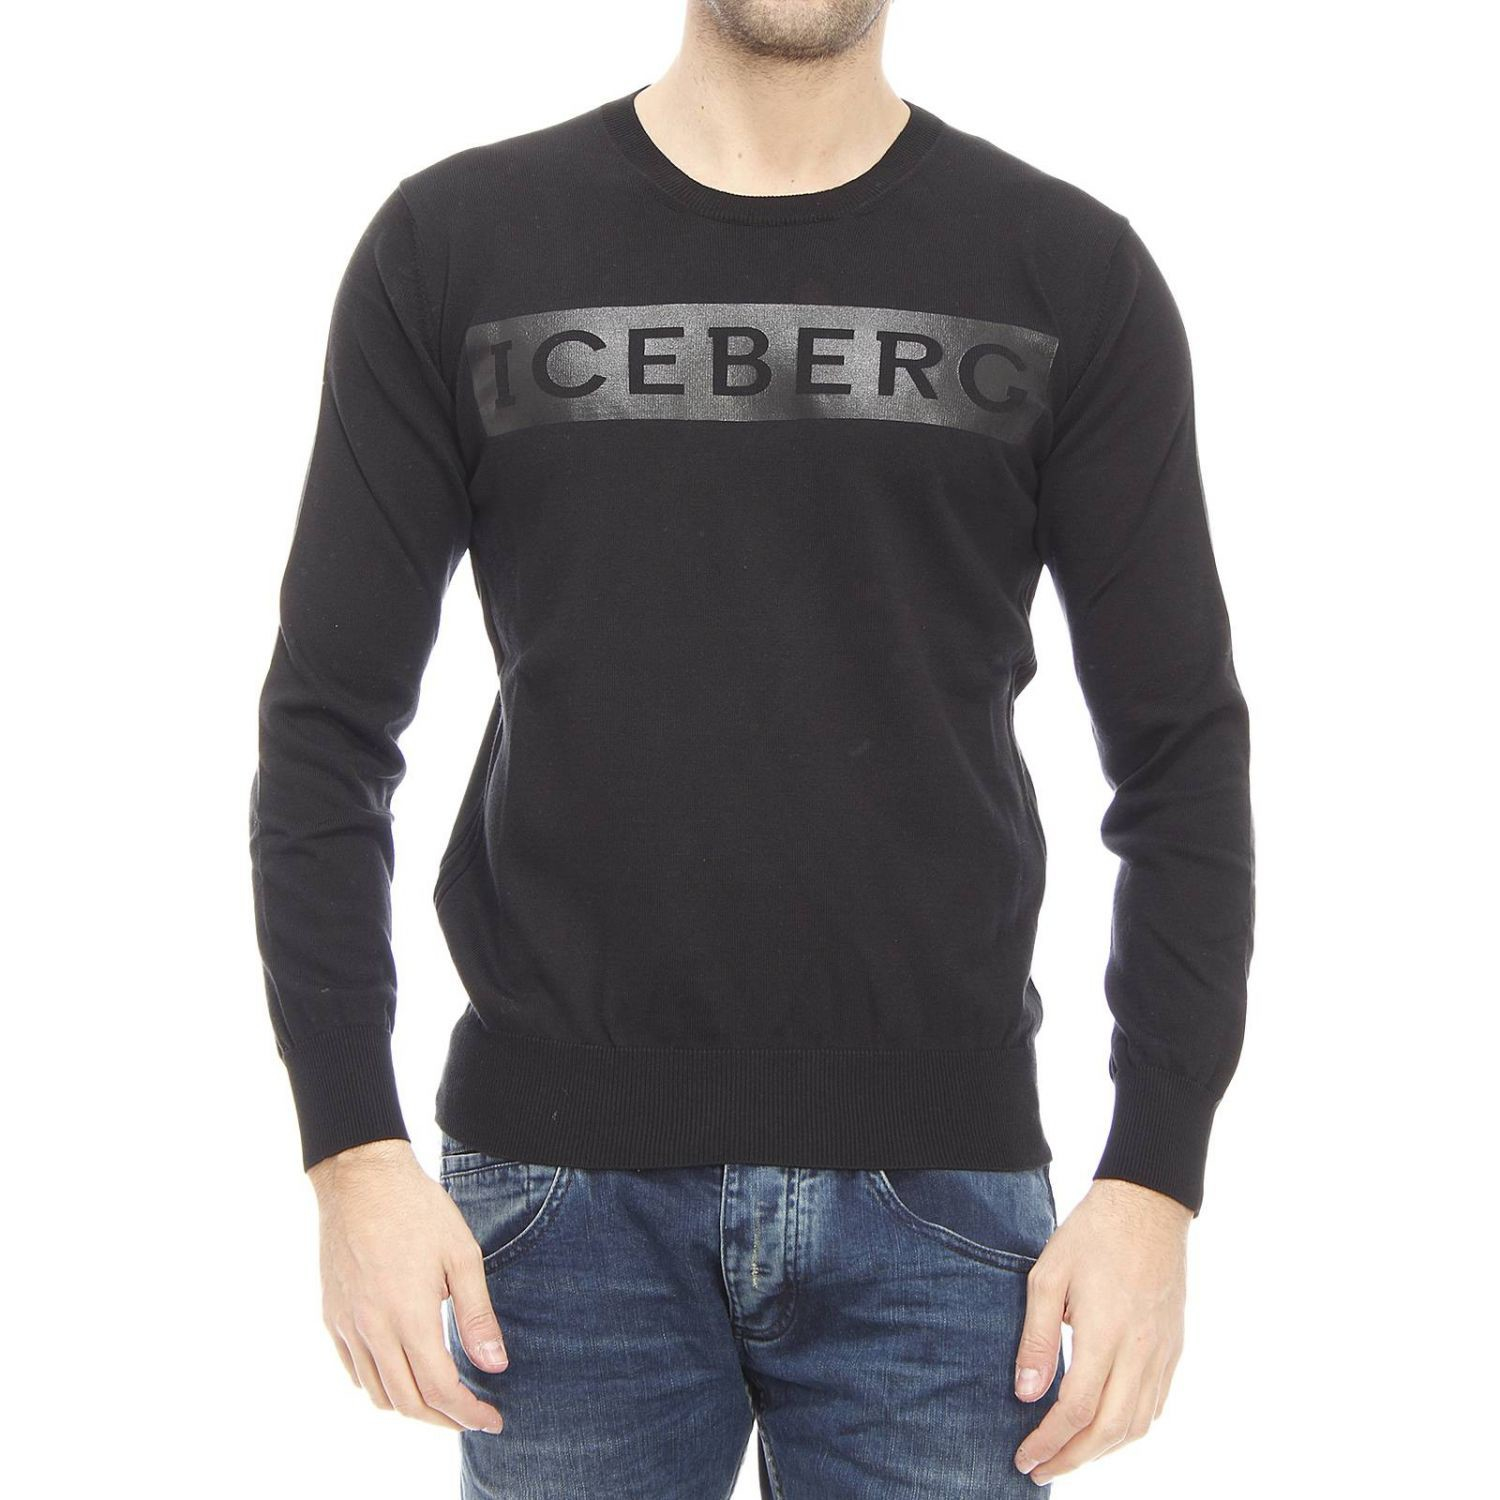 Iceberg Clothing Reviews - Online Shopping Iceberg